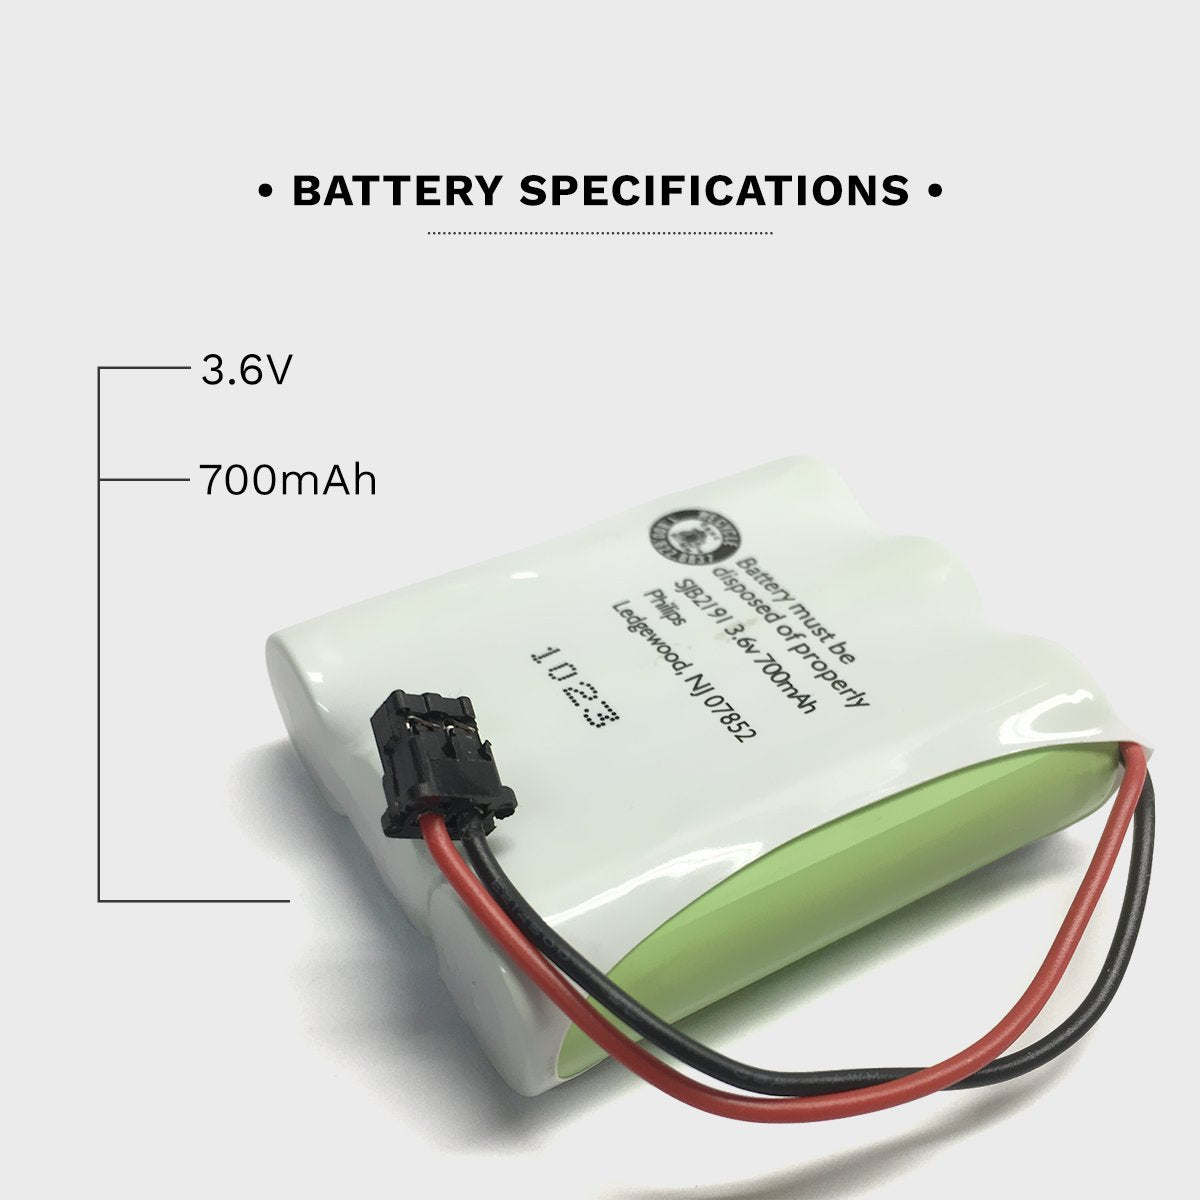 Uniden 24-148 Cordless Phone Battery